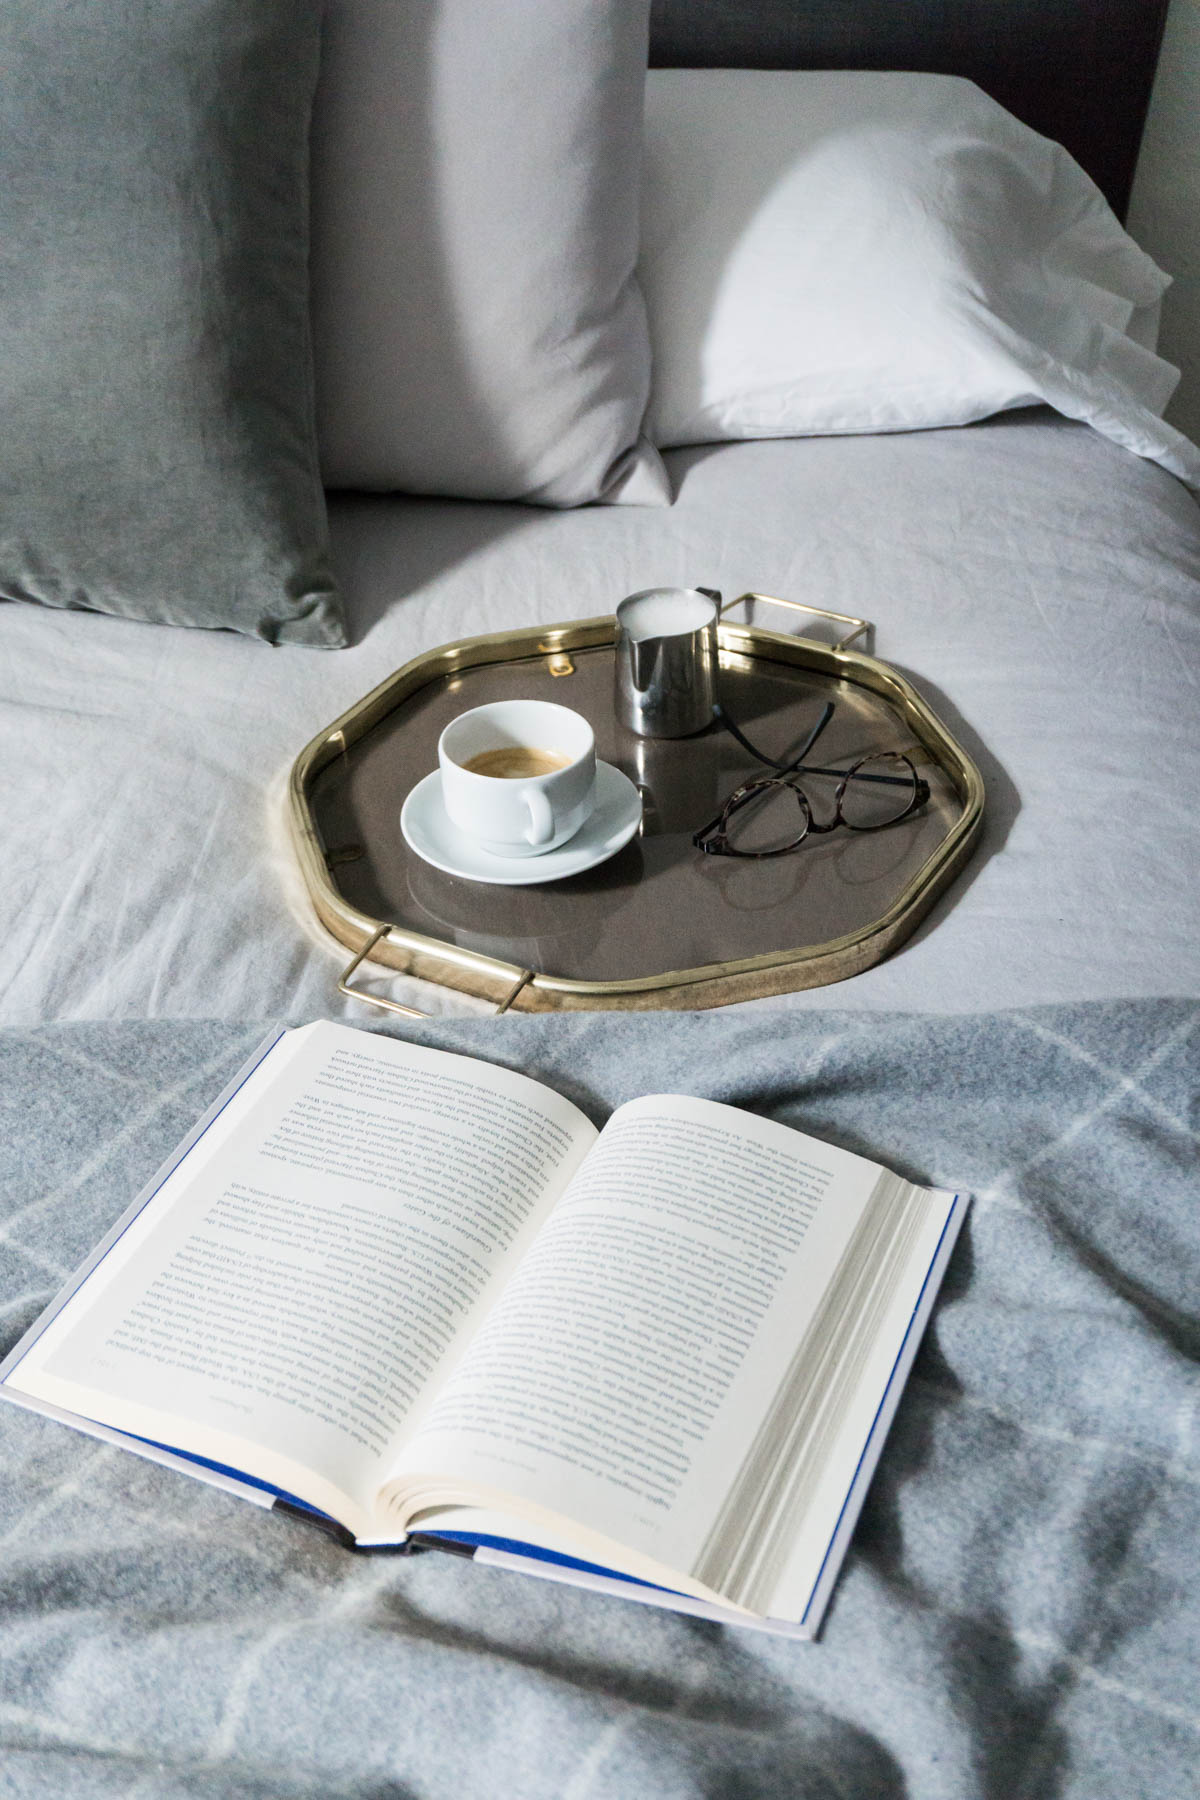 Scandinavian Glam Bedroom / Minimalist Interior, Coffe in Bed - RG Daily Blog